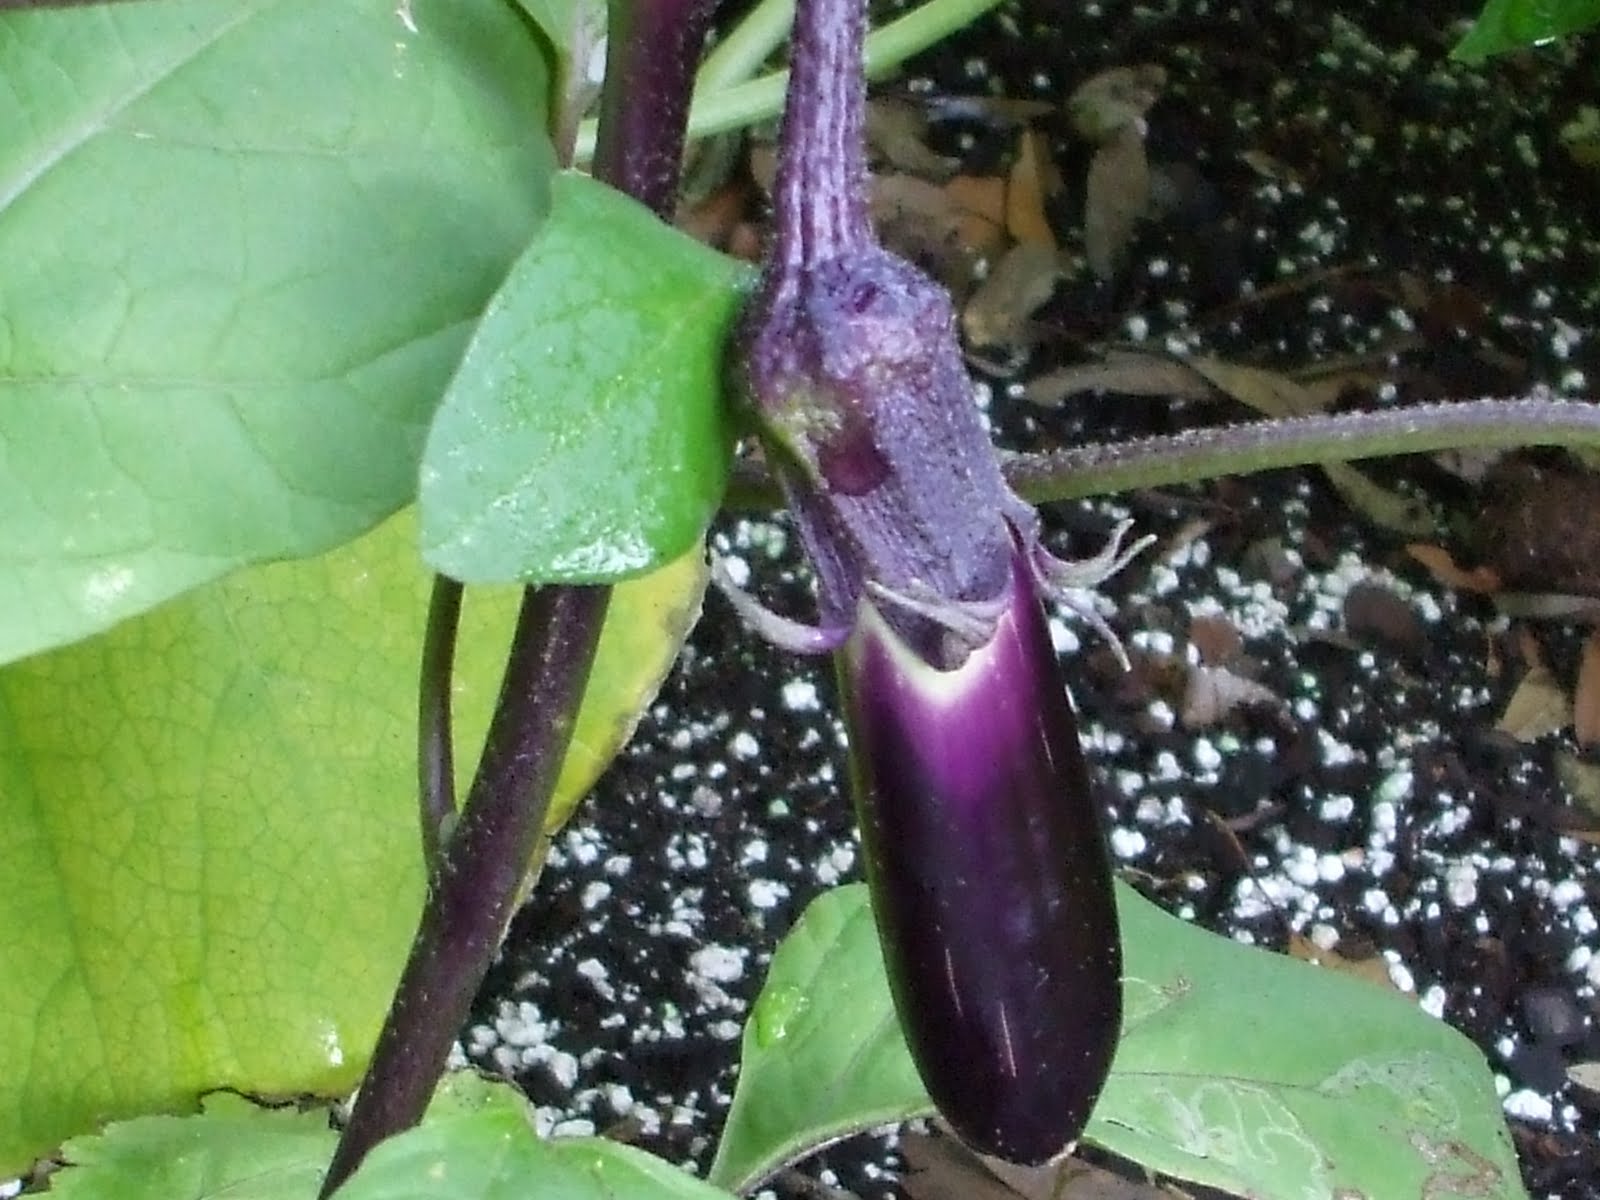 eggplant eating been who realtor orlando ripe tomatoes pick ready